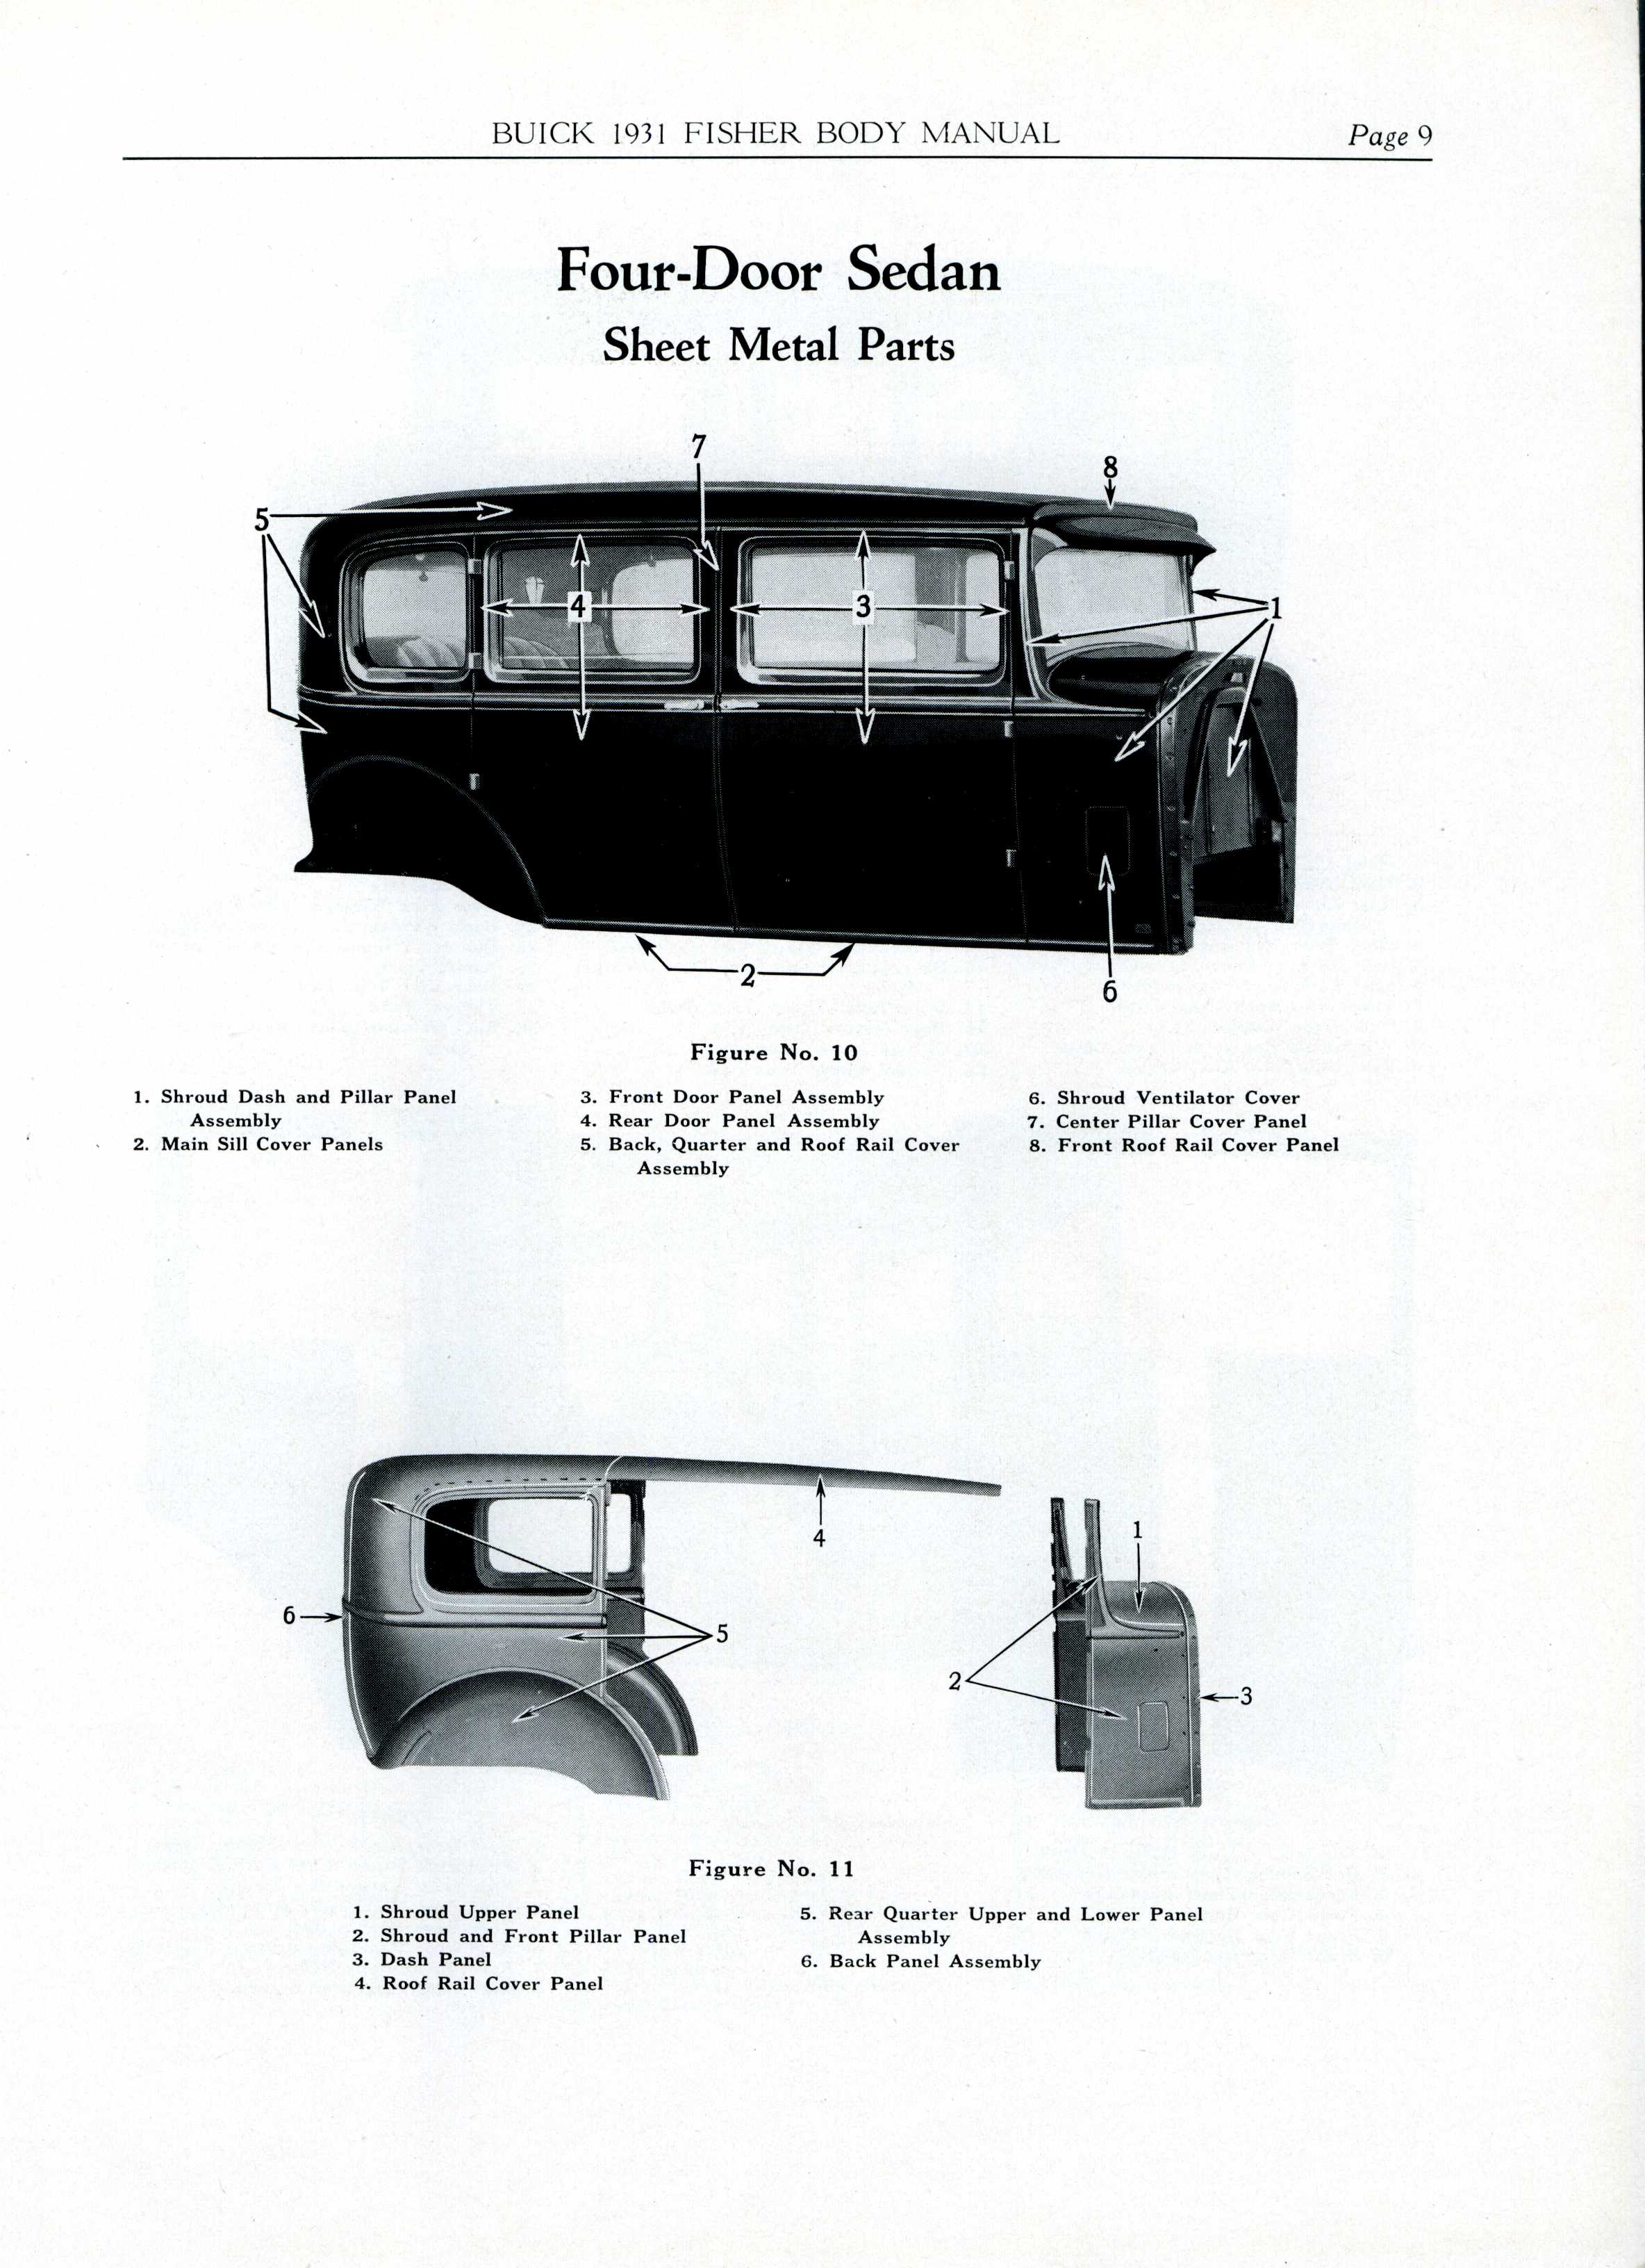 1931 Buick Fisher Body Manual-09